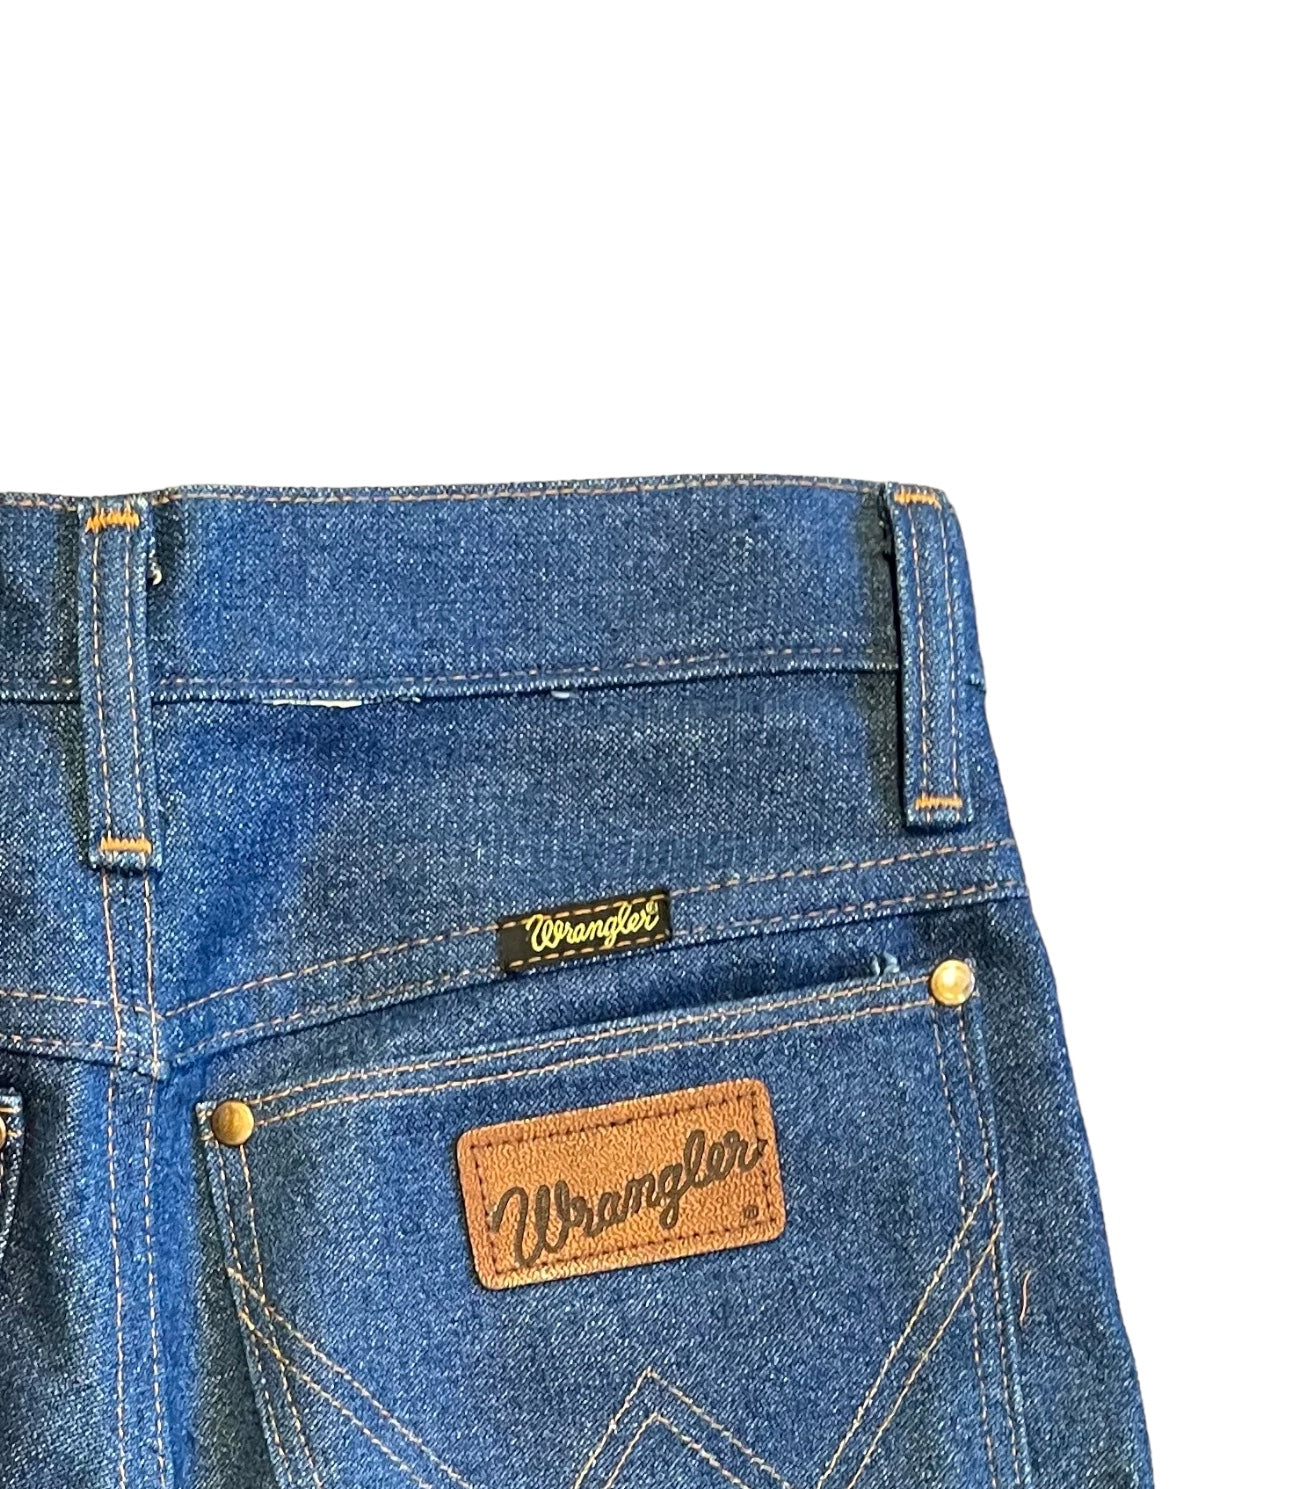 Wranglers jeans vintage -27x32